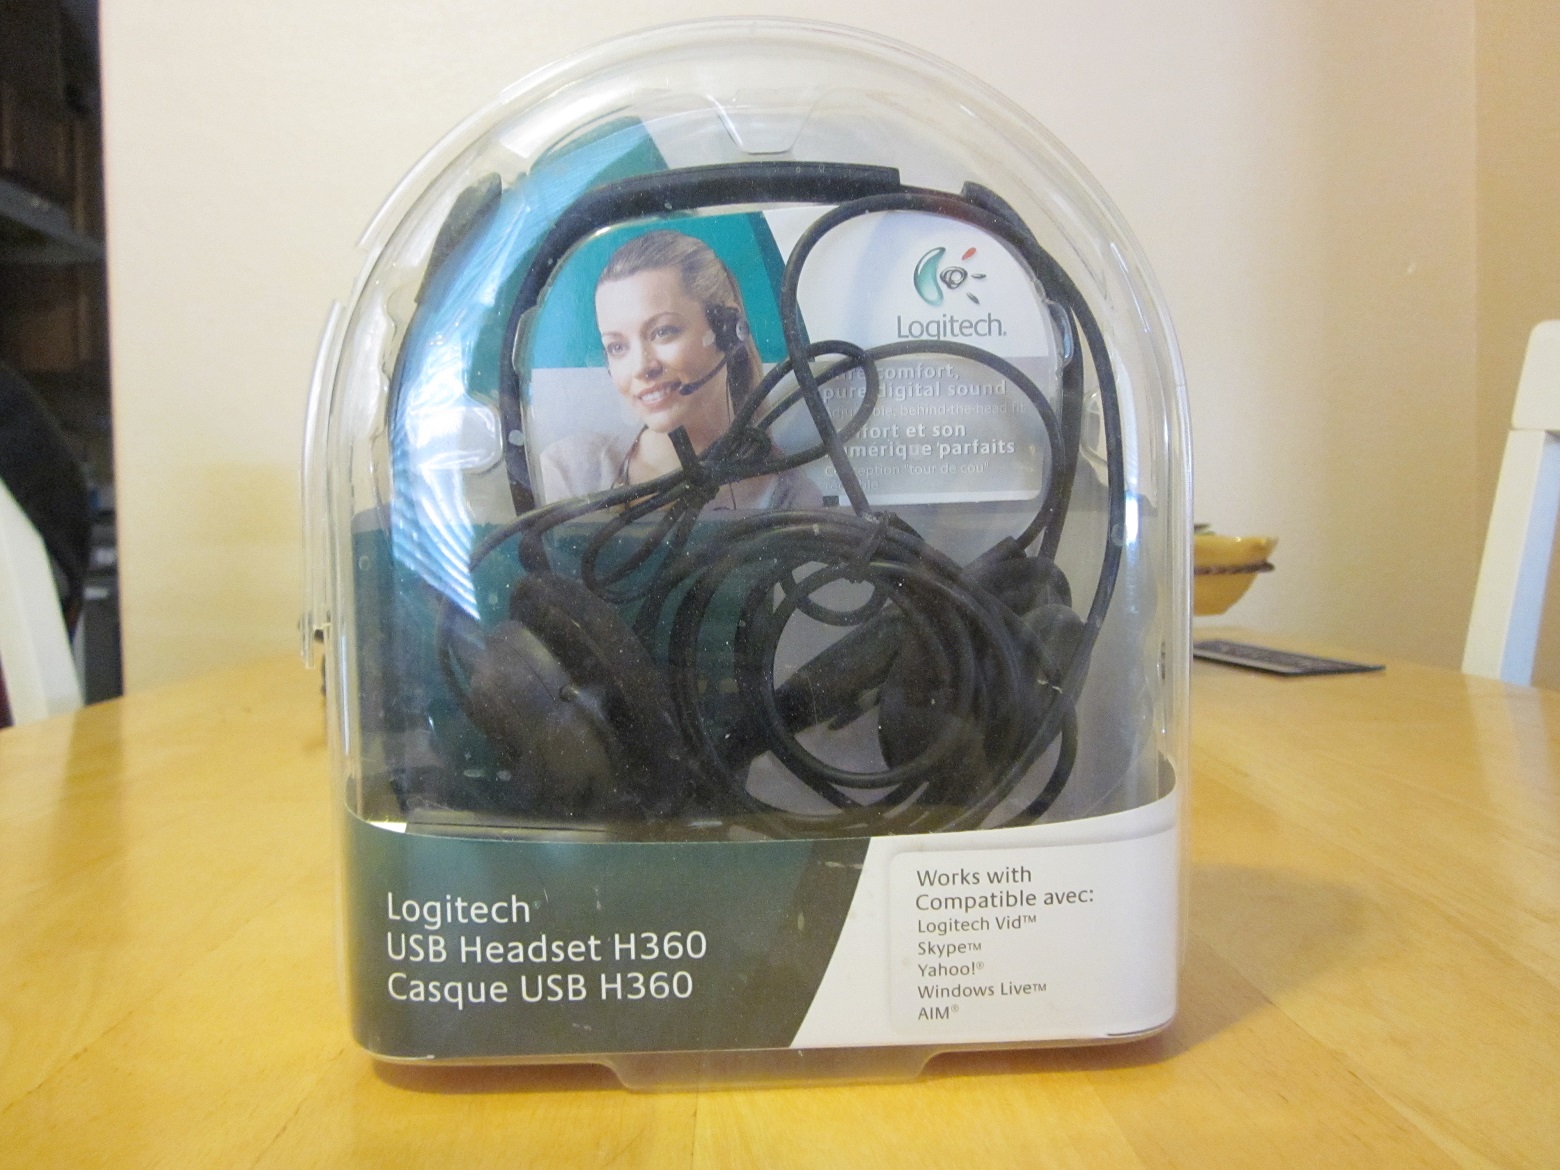 Logitech USB Headset H360